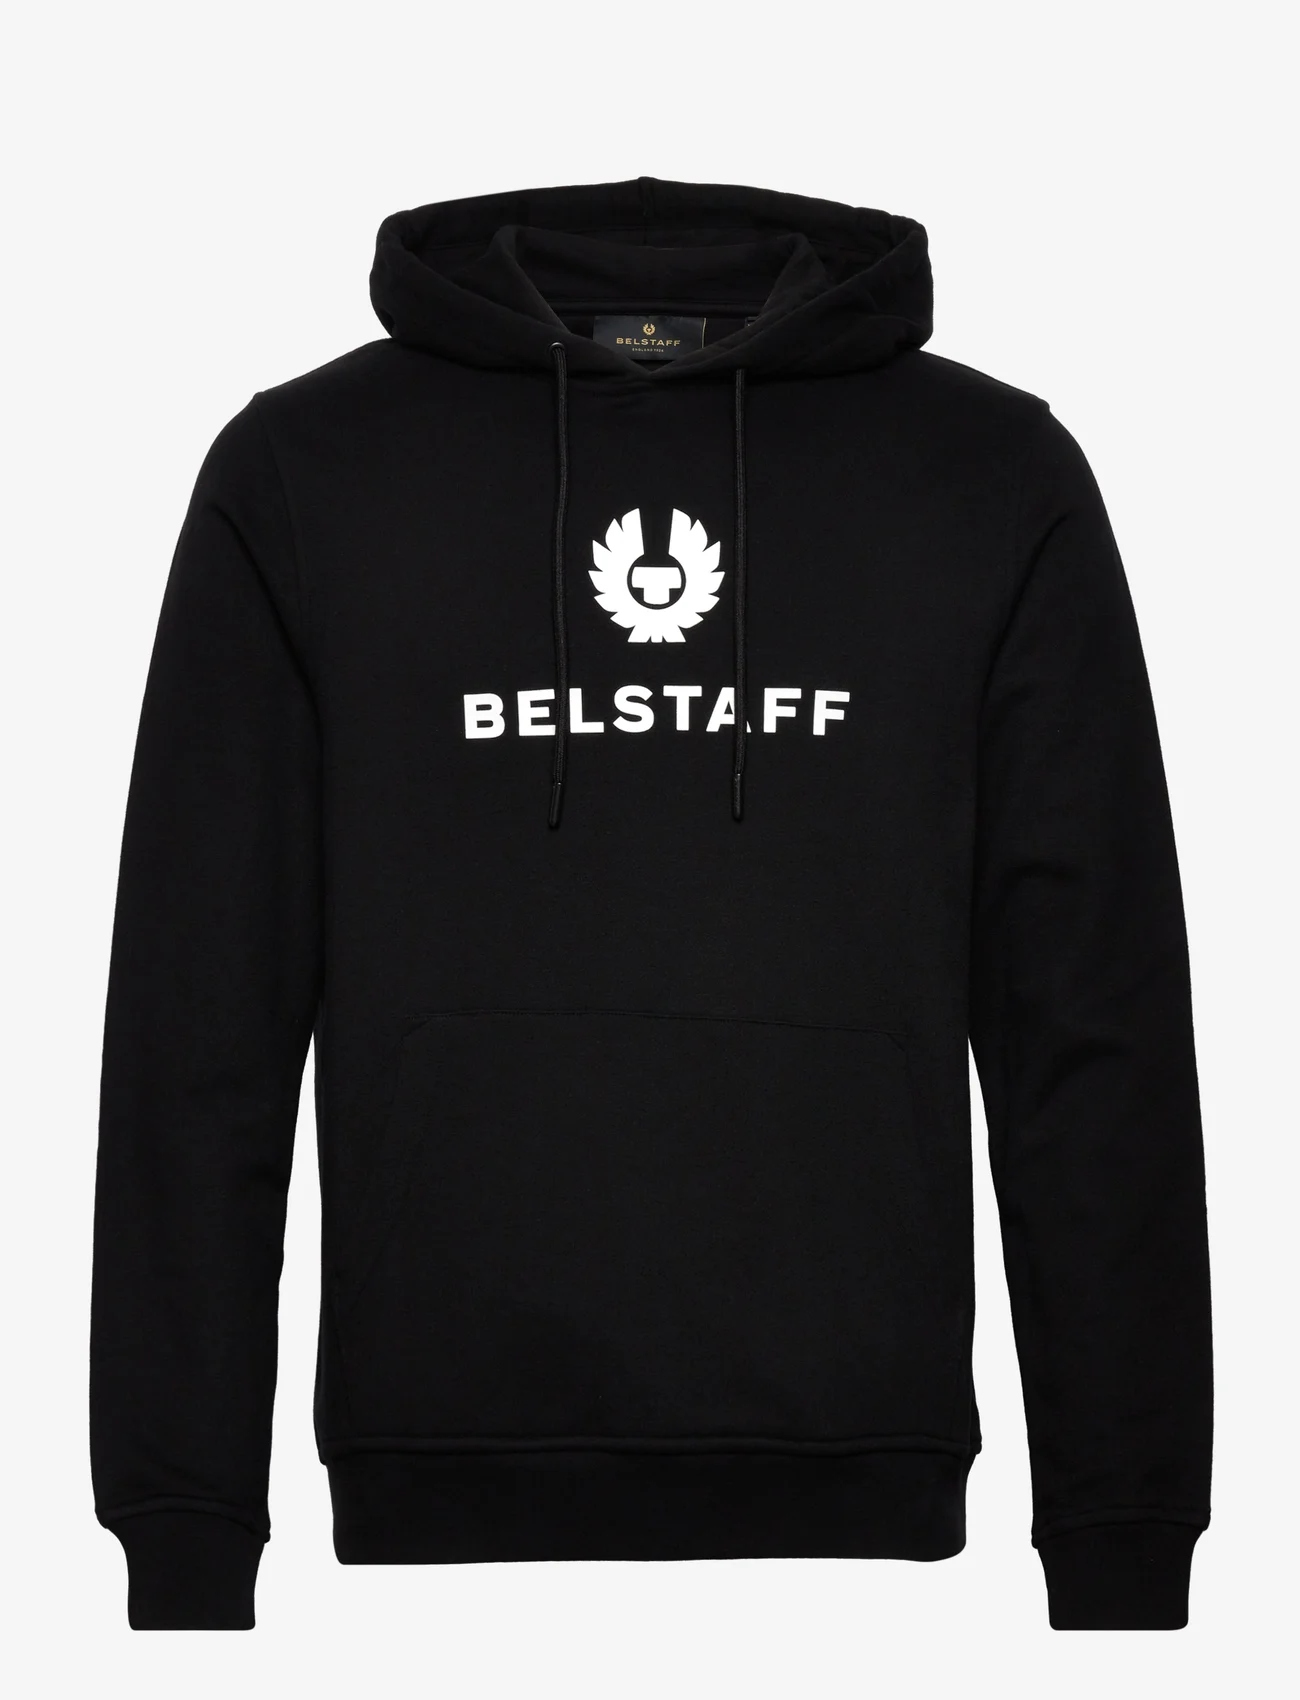 Belstaff - BELSTAFF SIGNATURE HOODIE - hupparit - black / off white - 0